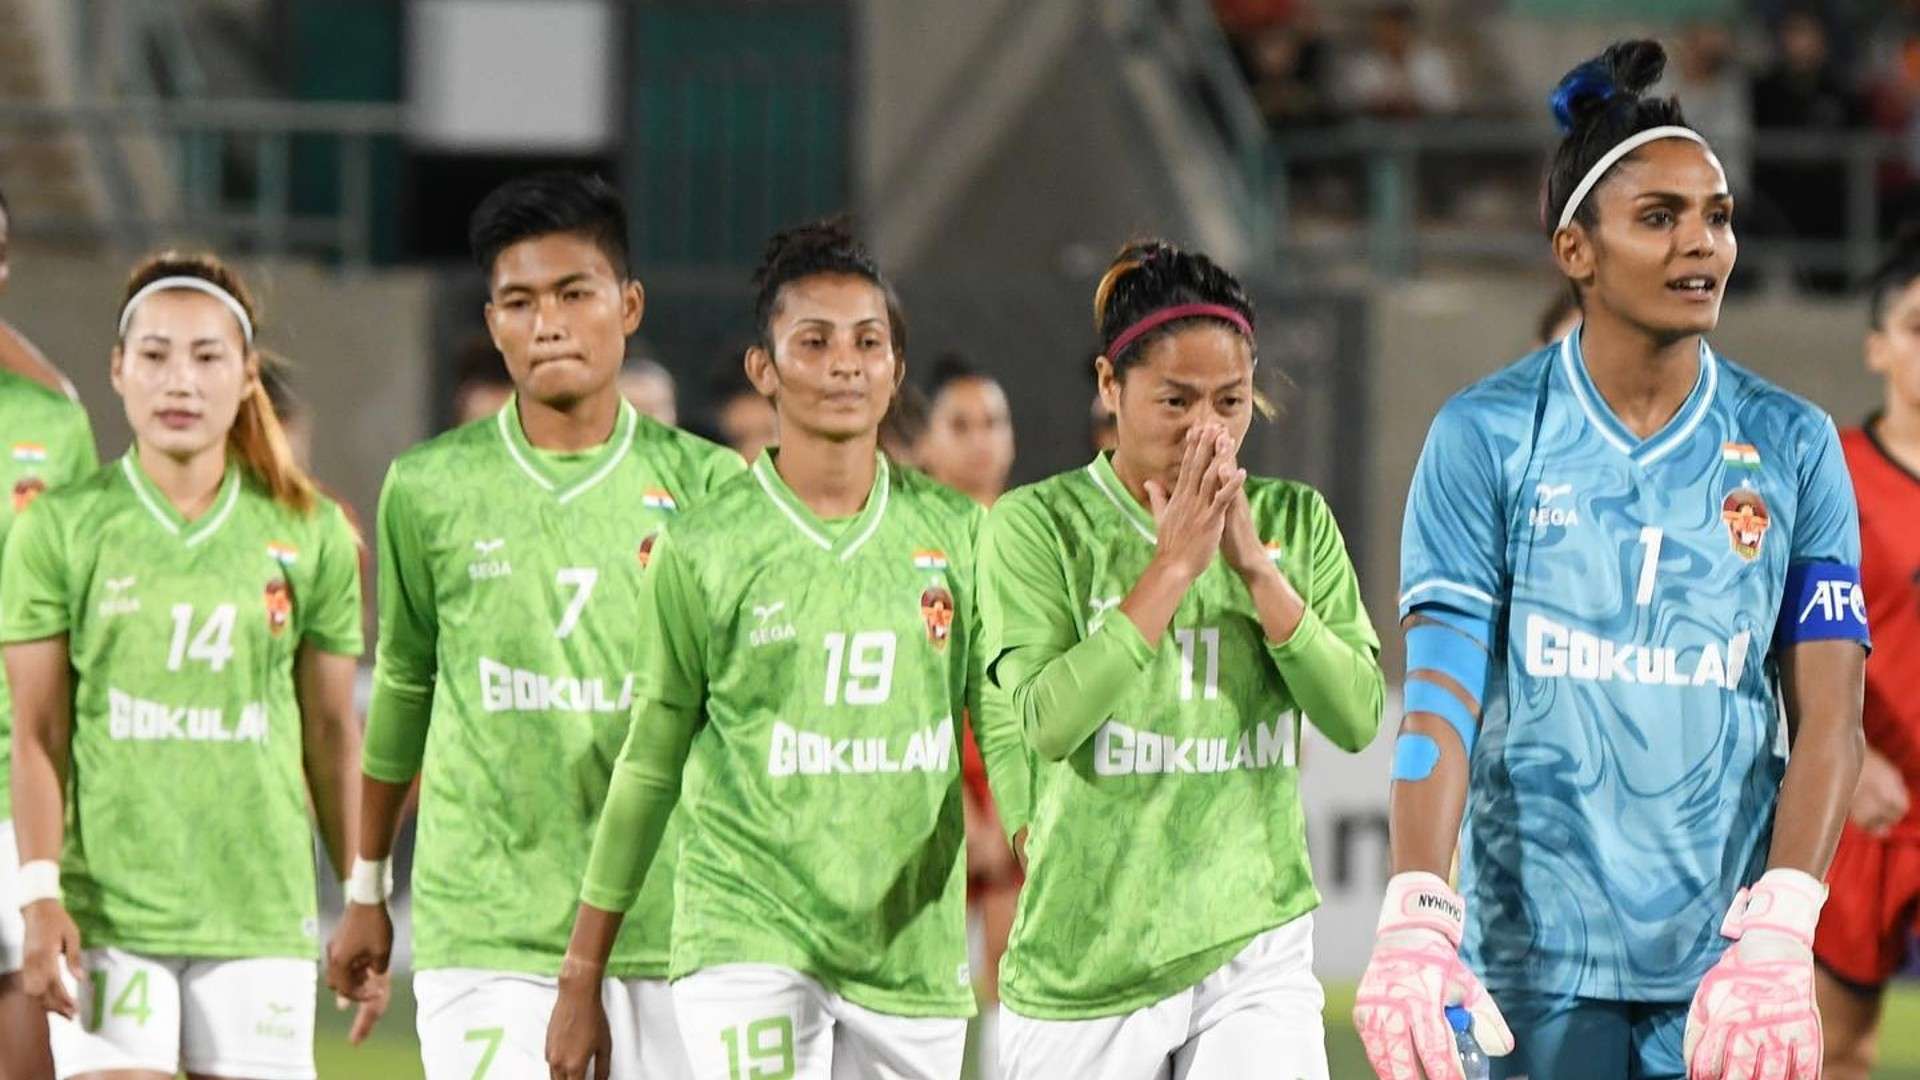 Gokulam Kerala, 2021 AFC Women's Club Championship